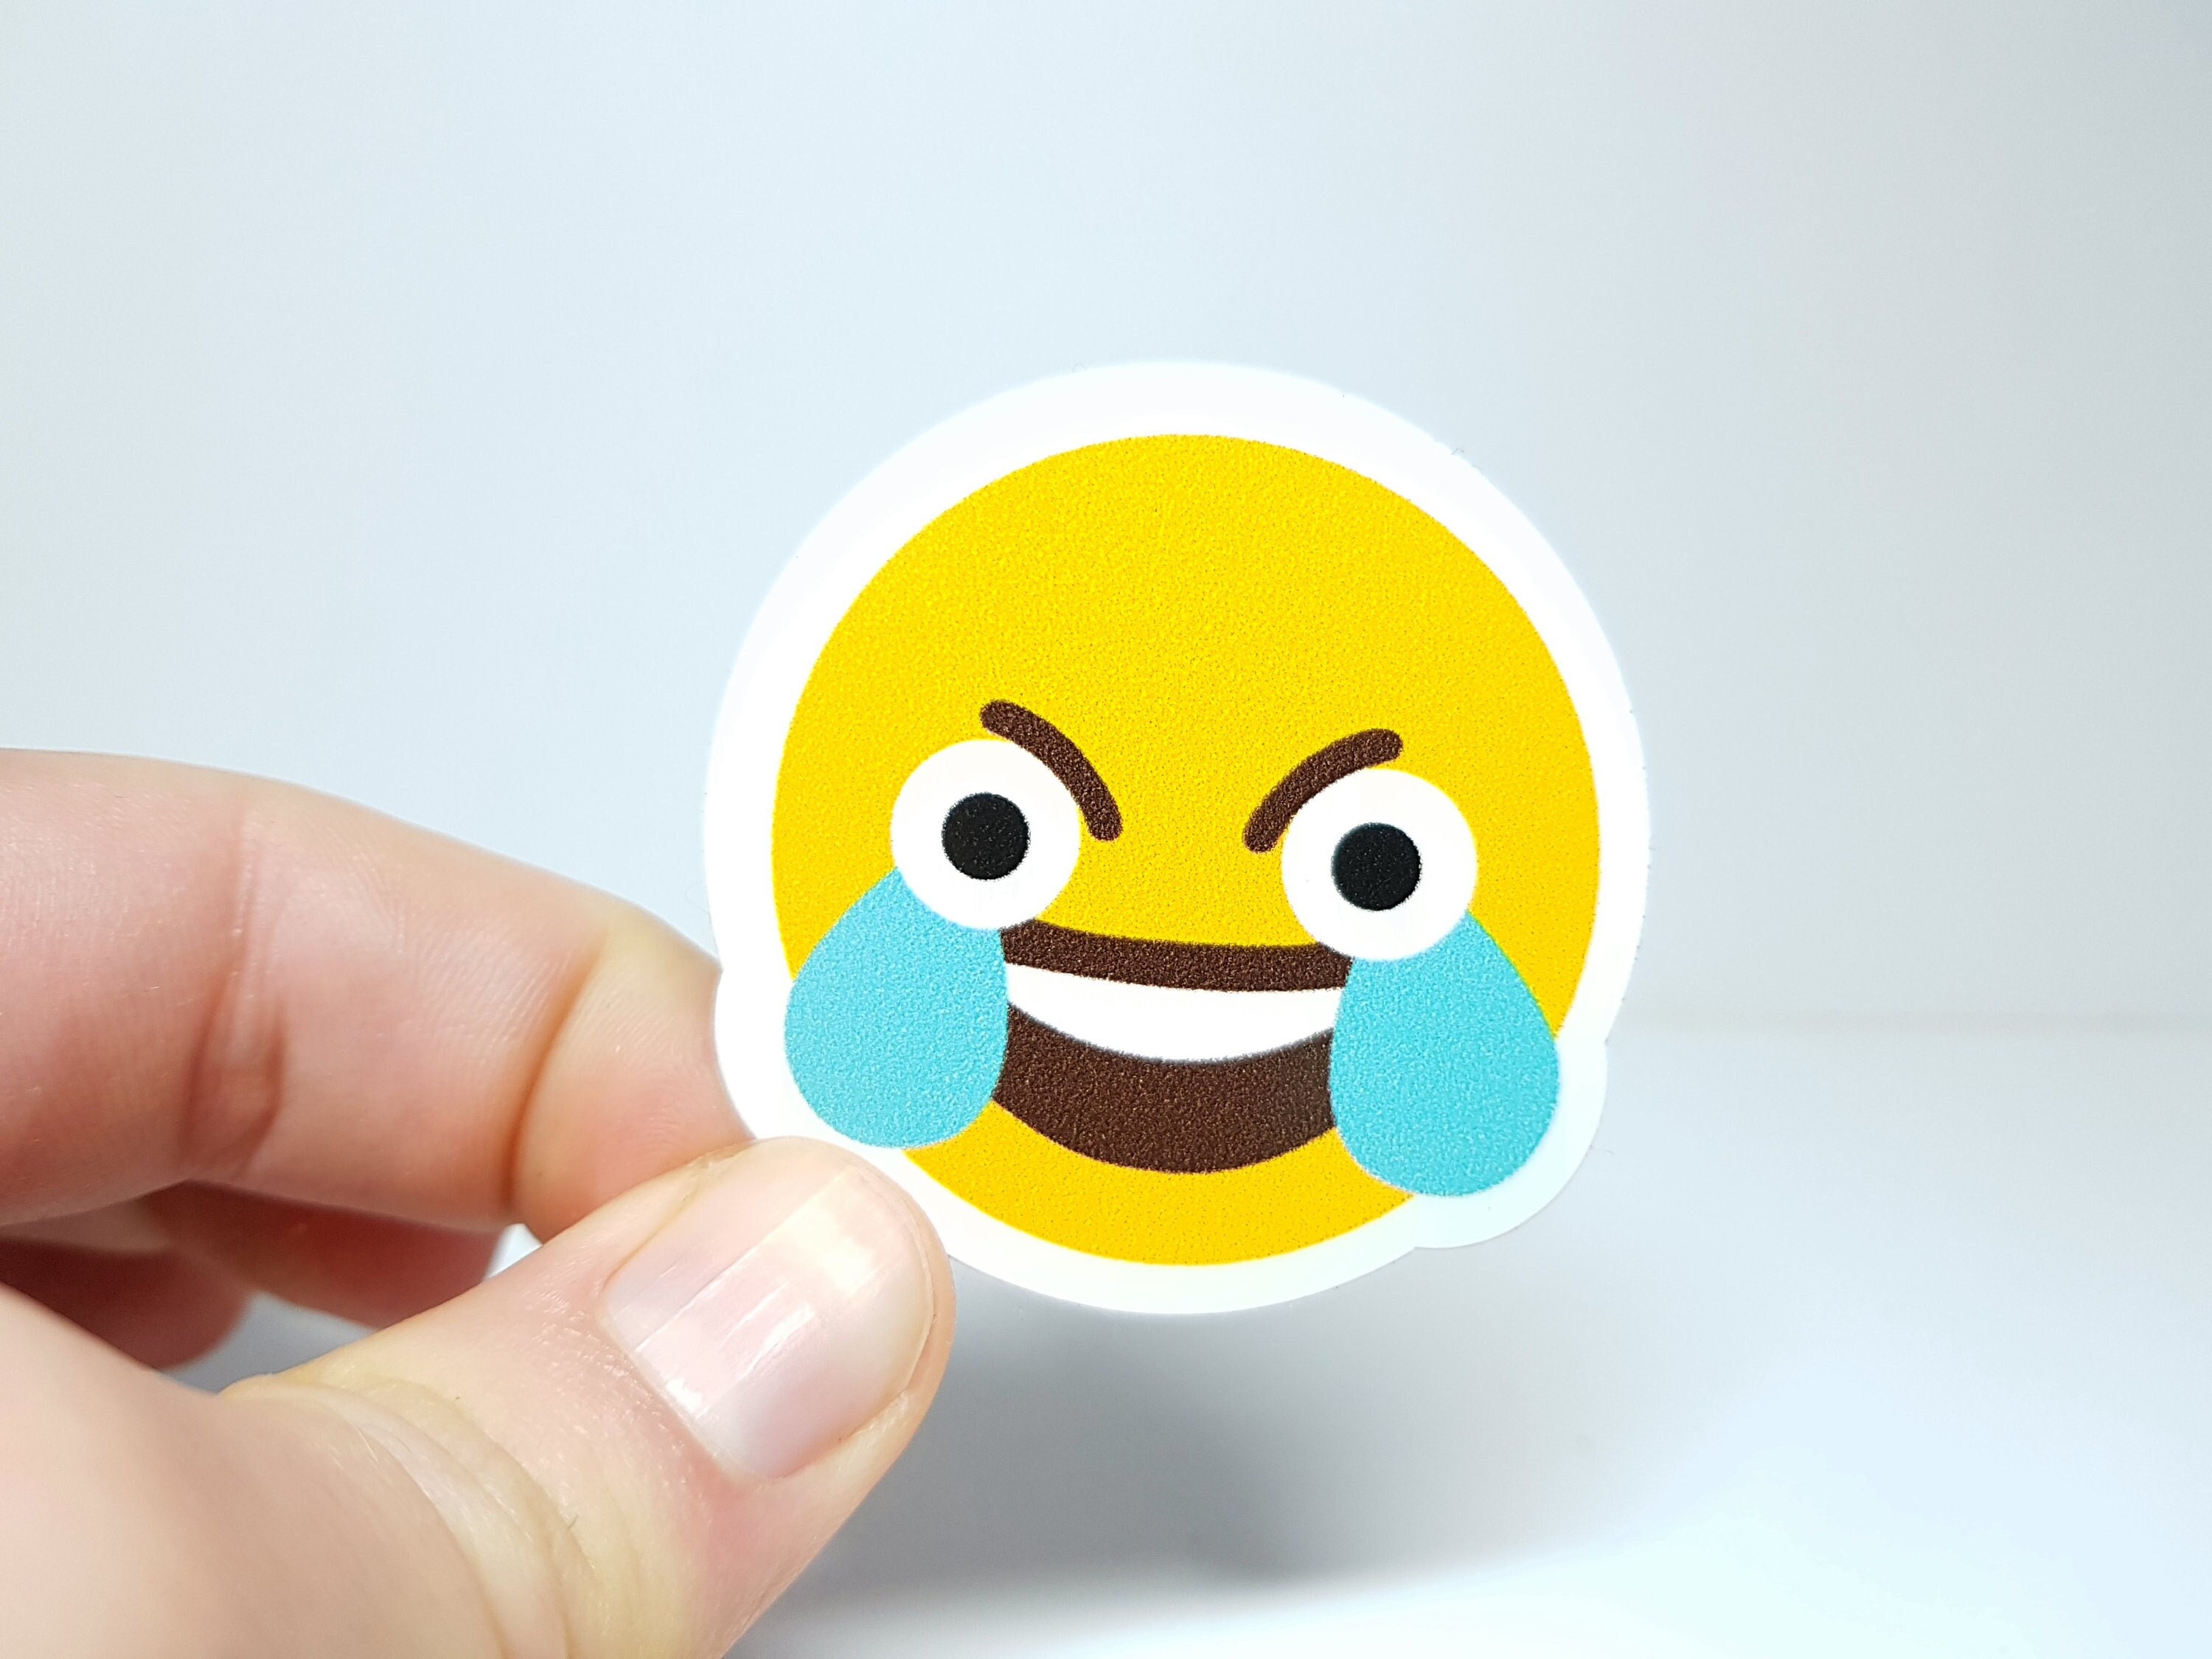 Emoji Meme Stickers for Sale